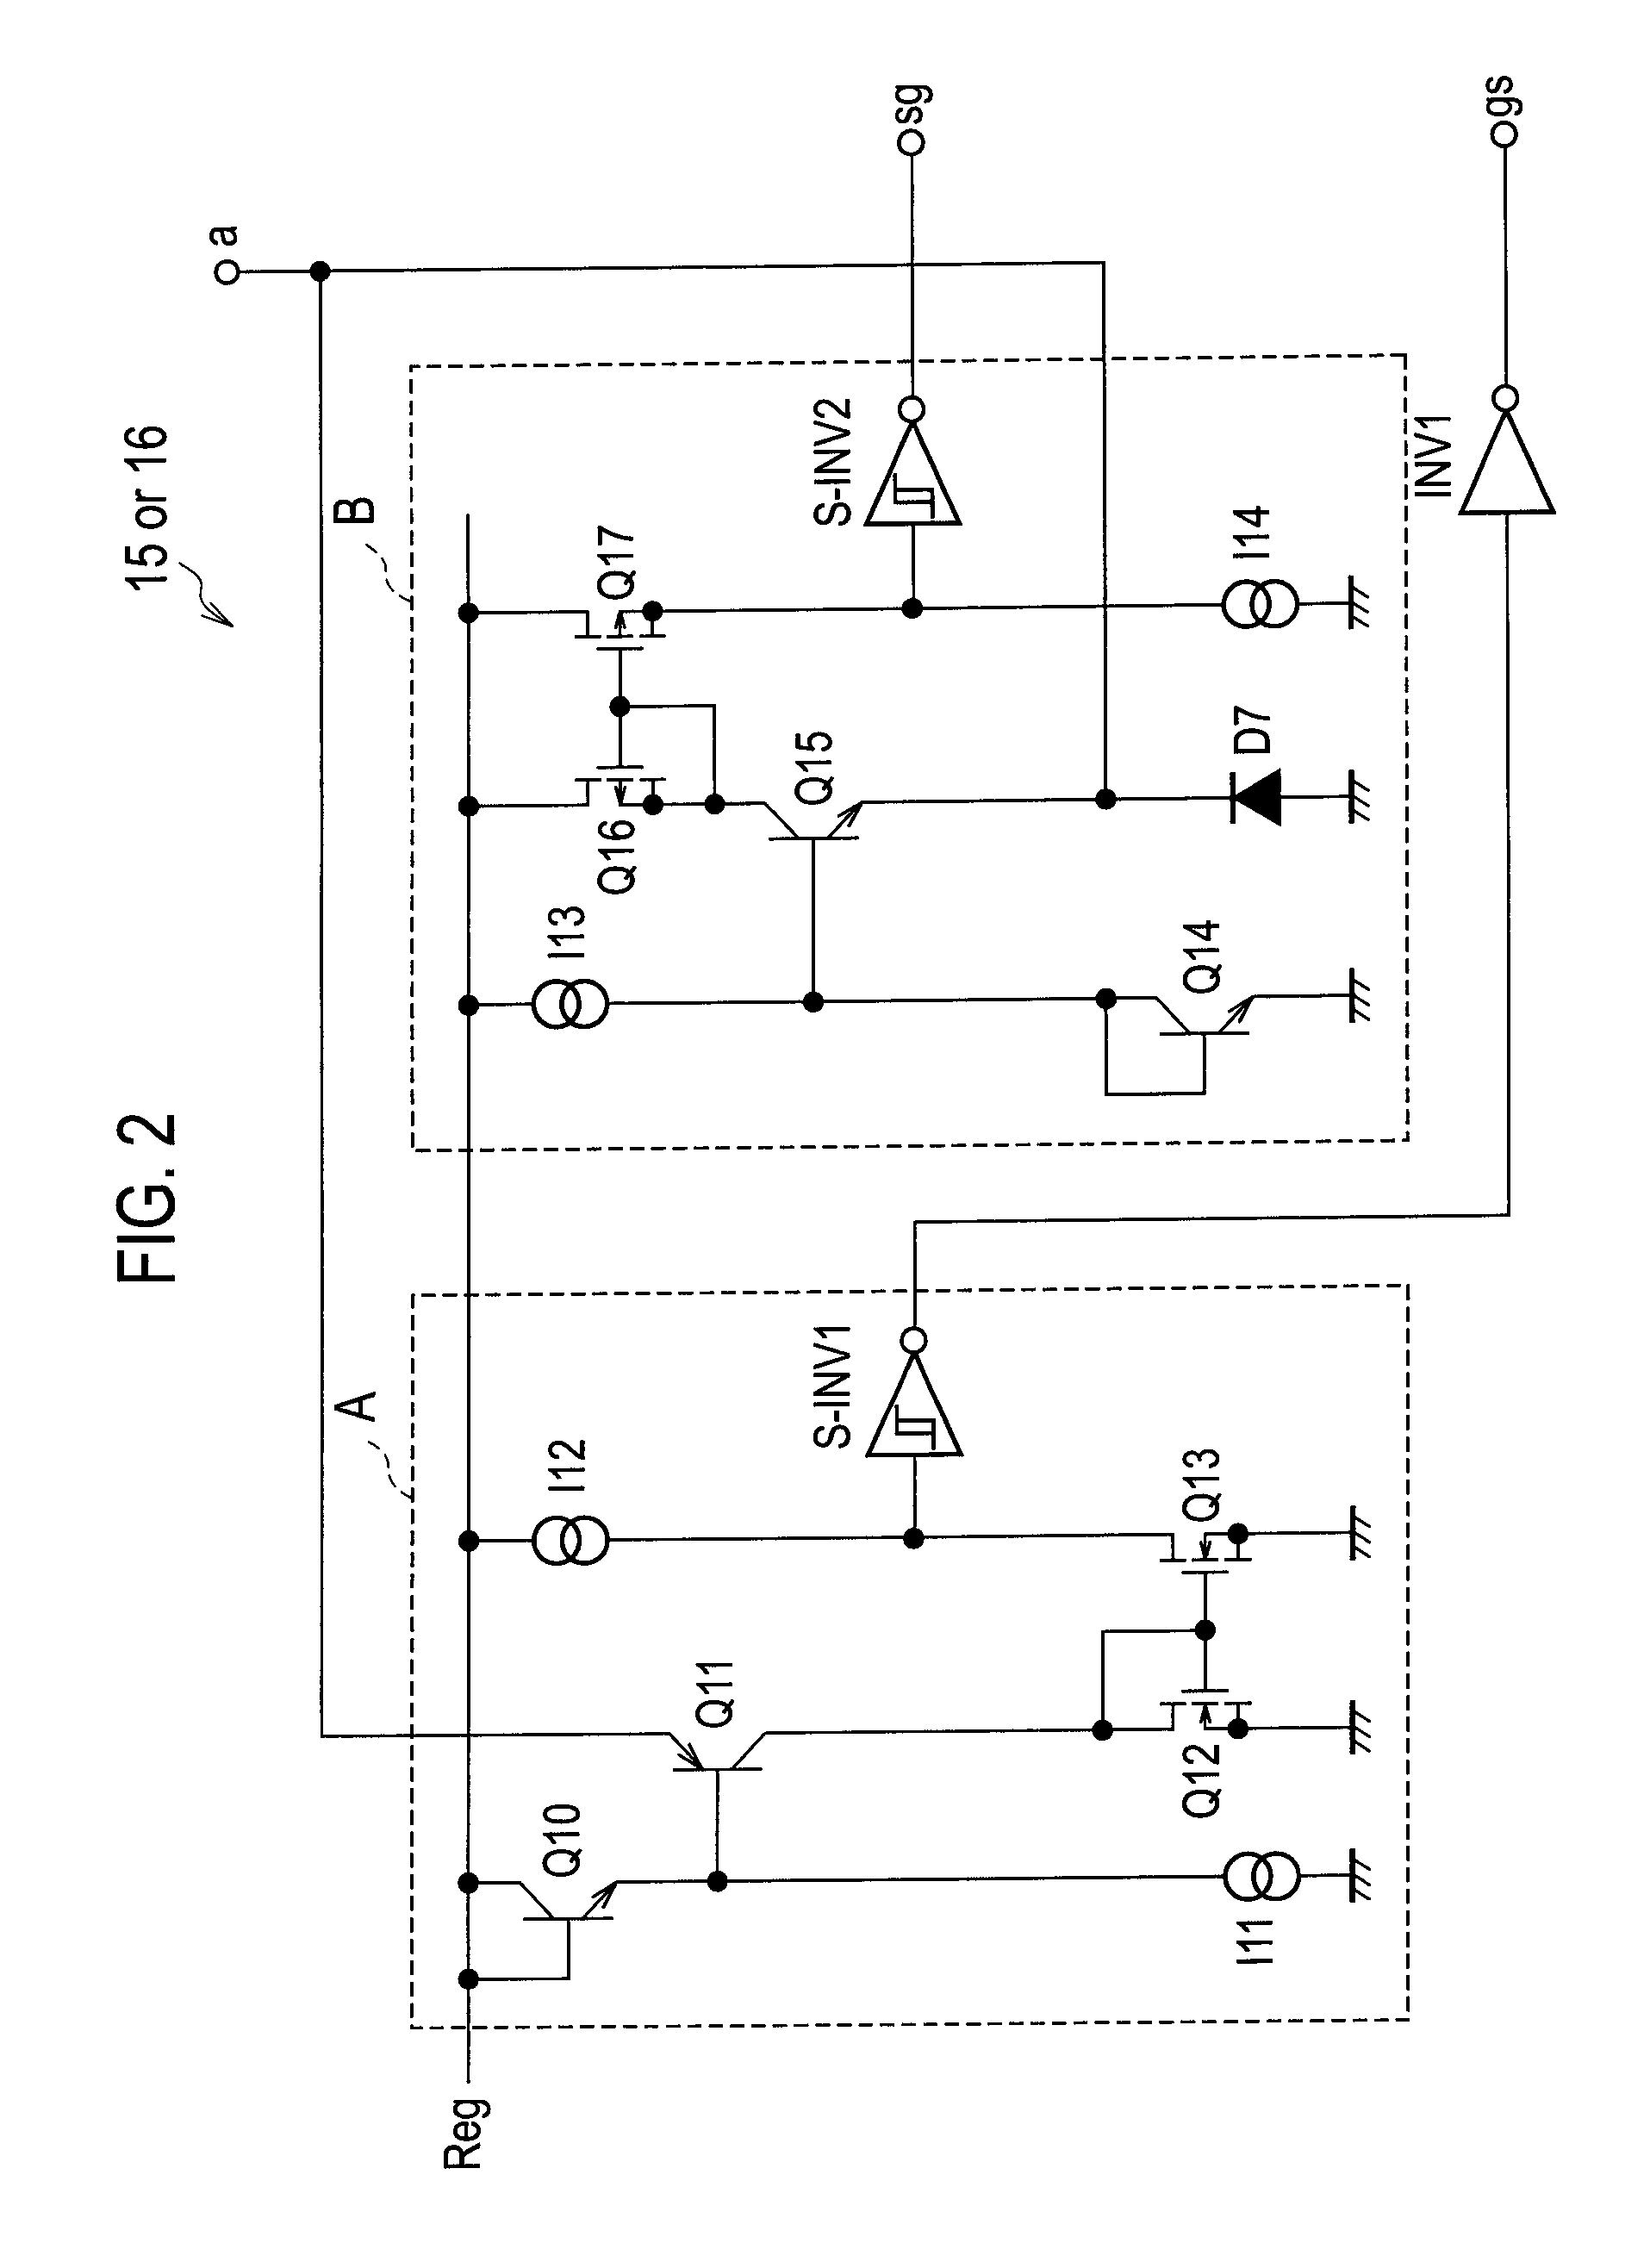 Level-shift circuit